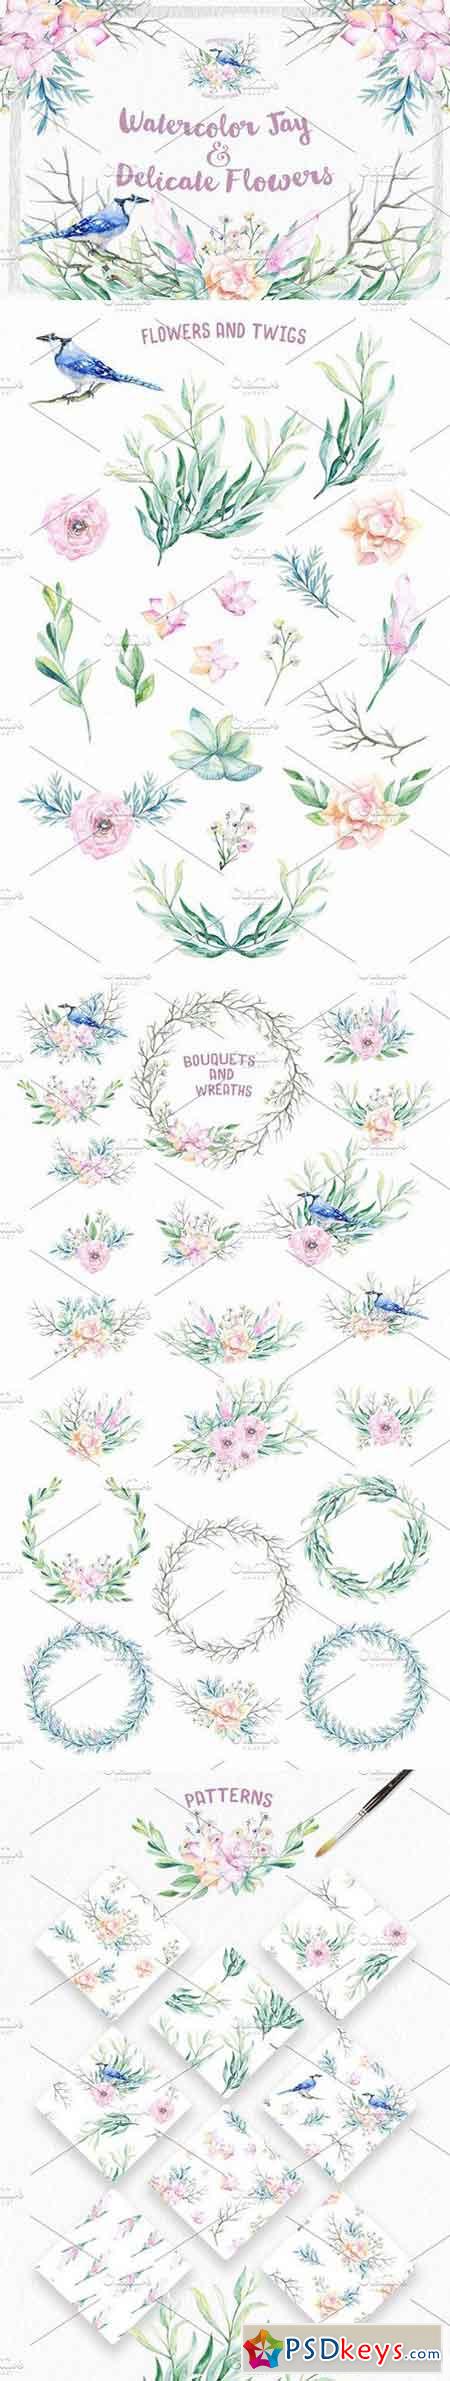 Watercolor Jay & Delicate Flowers 874607